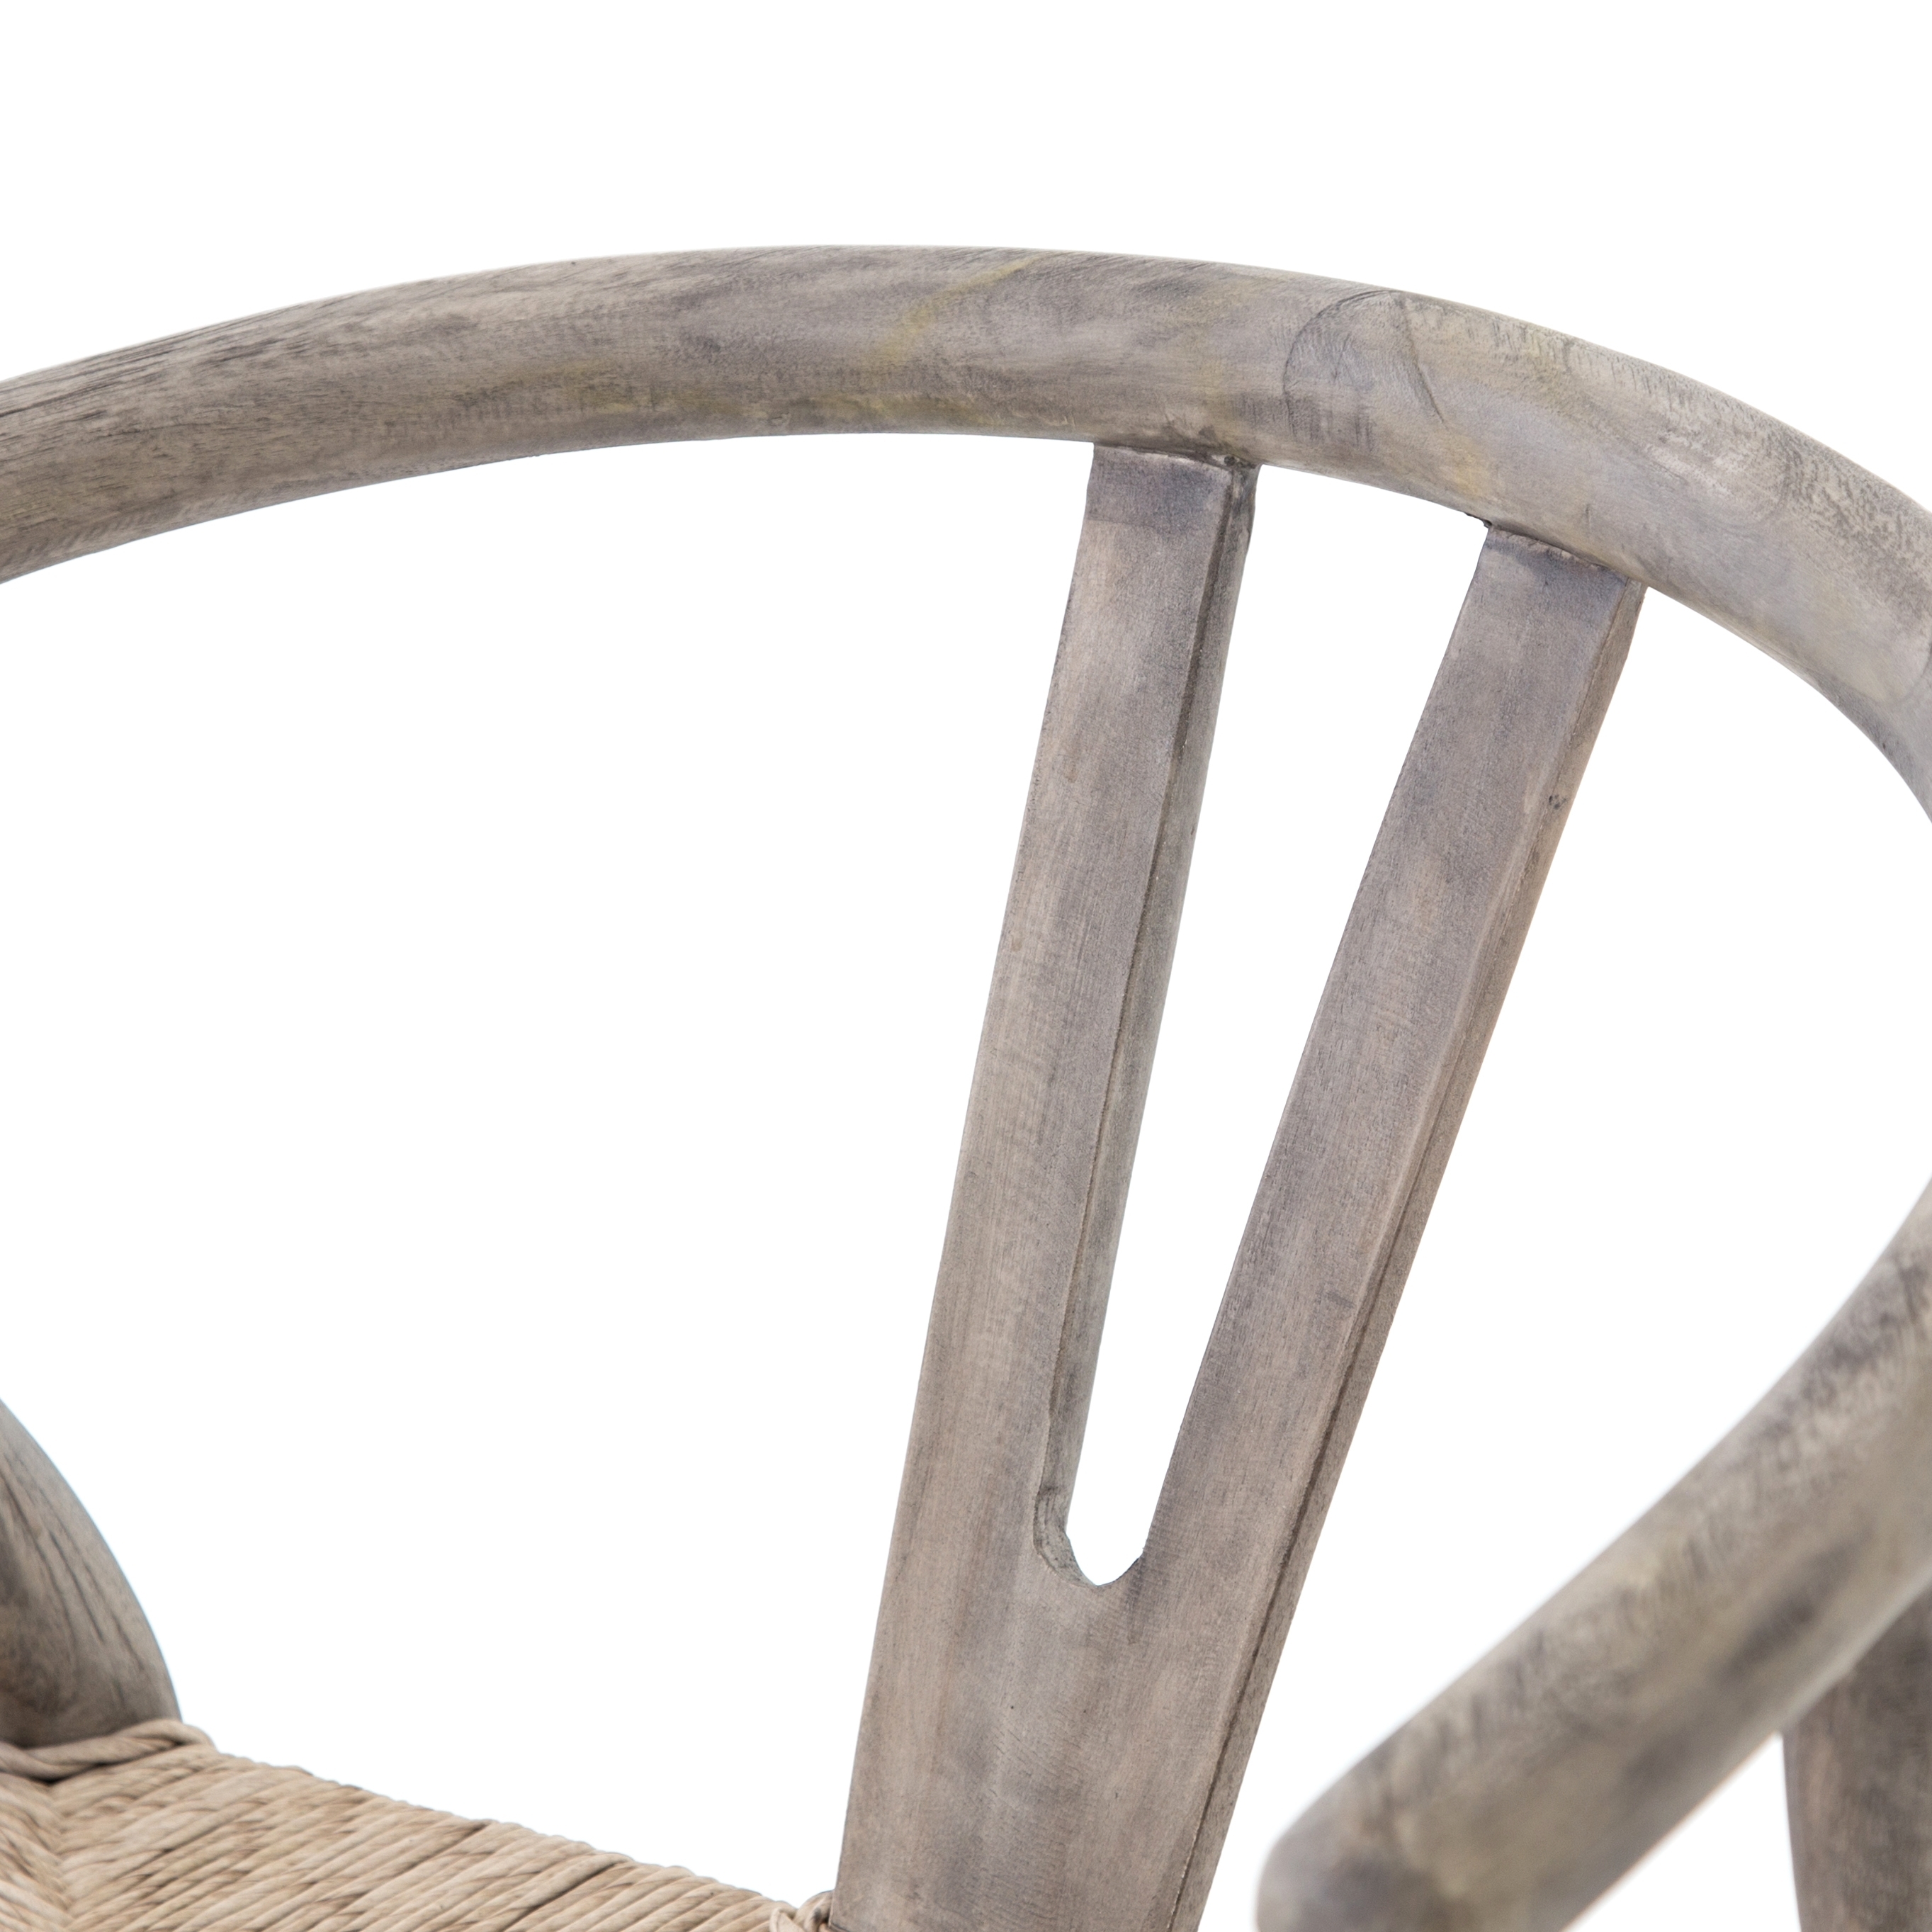 Gradie Indoor/Outdoor Dining Chair, Weathered Gray - Image 4